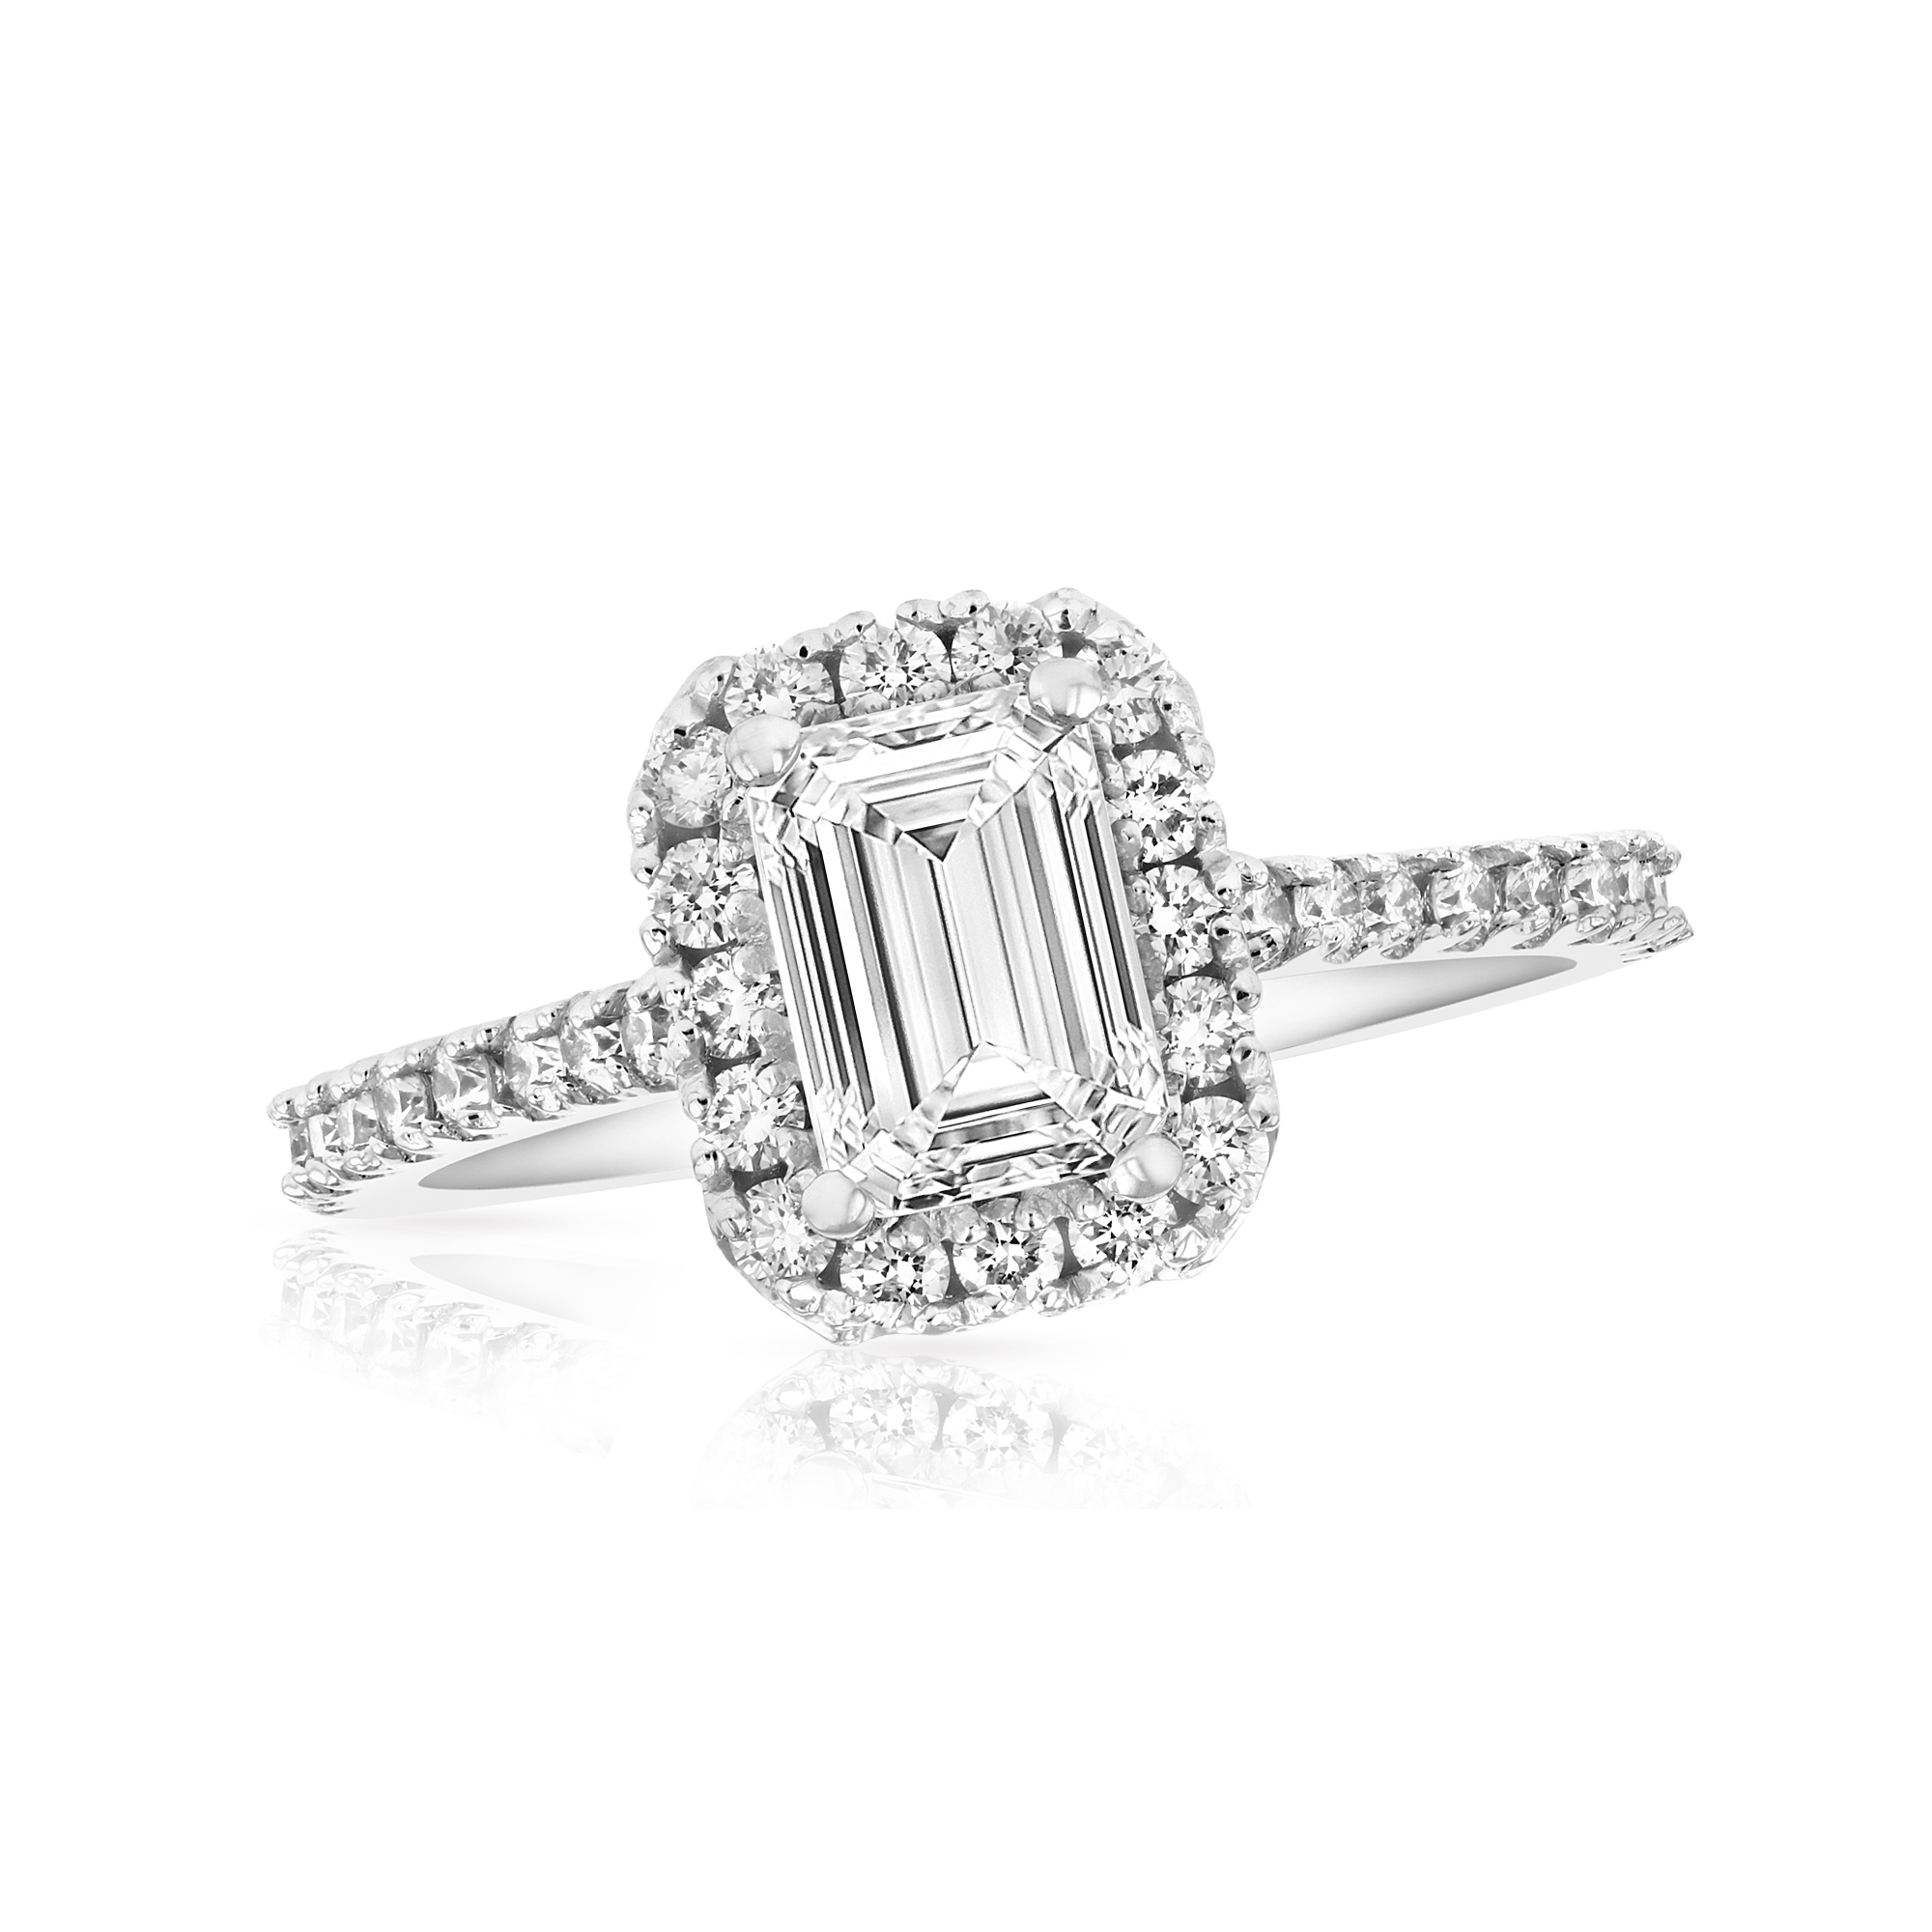 View 0.54ctw Diamond Emerald Cut Halo Semi Mount Ring in 14k White Gold